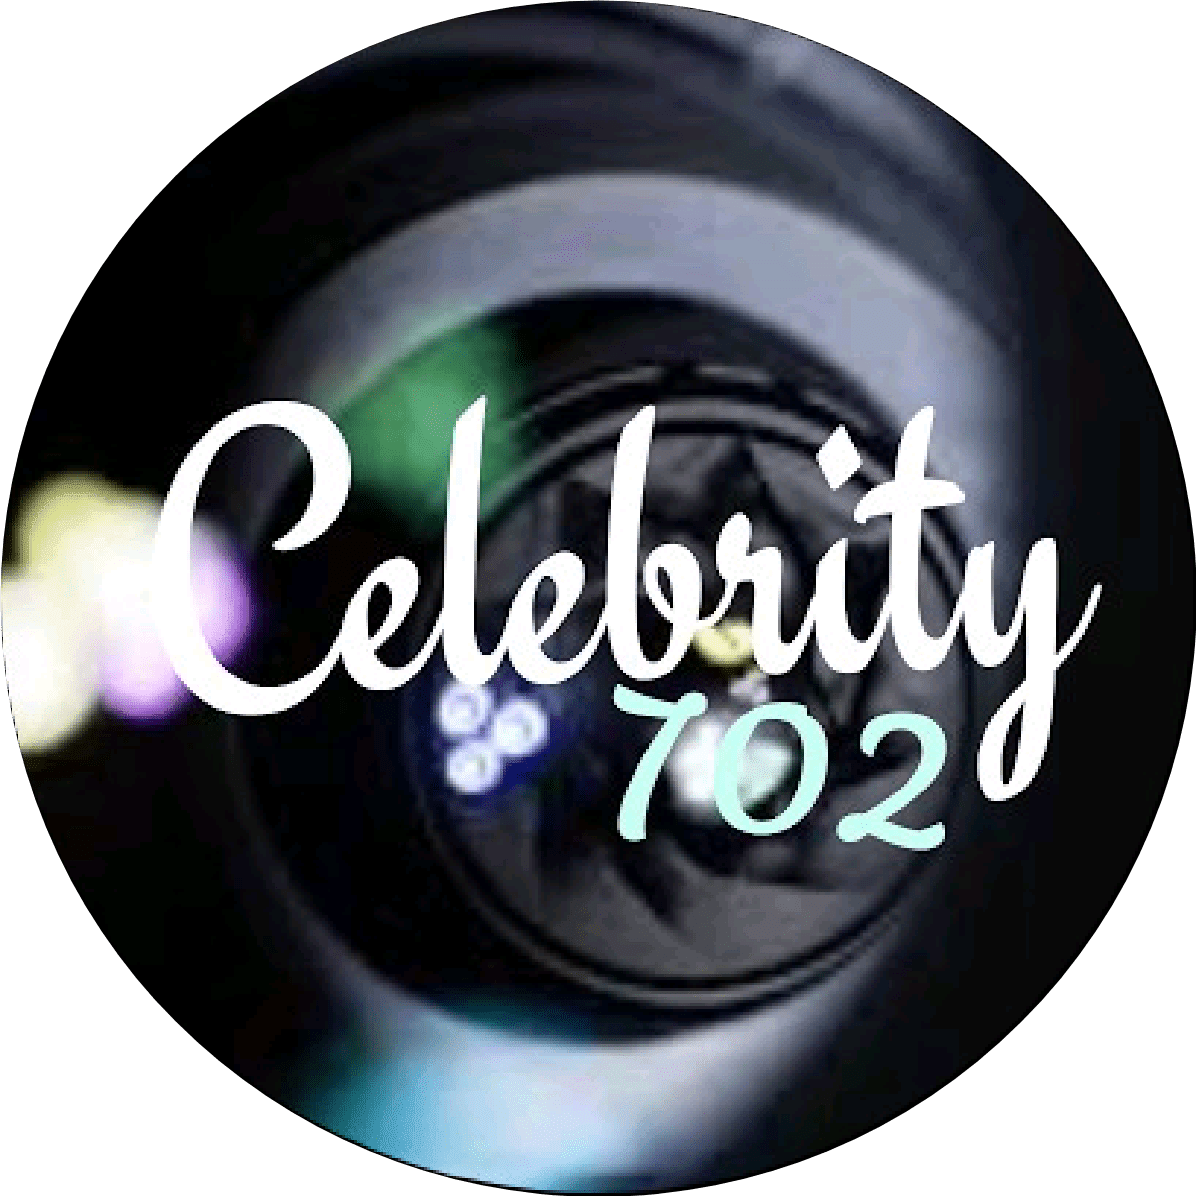 Celebrity702 Online Entertainment